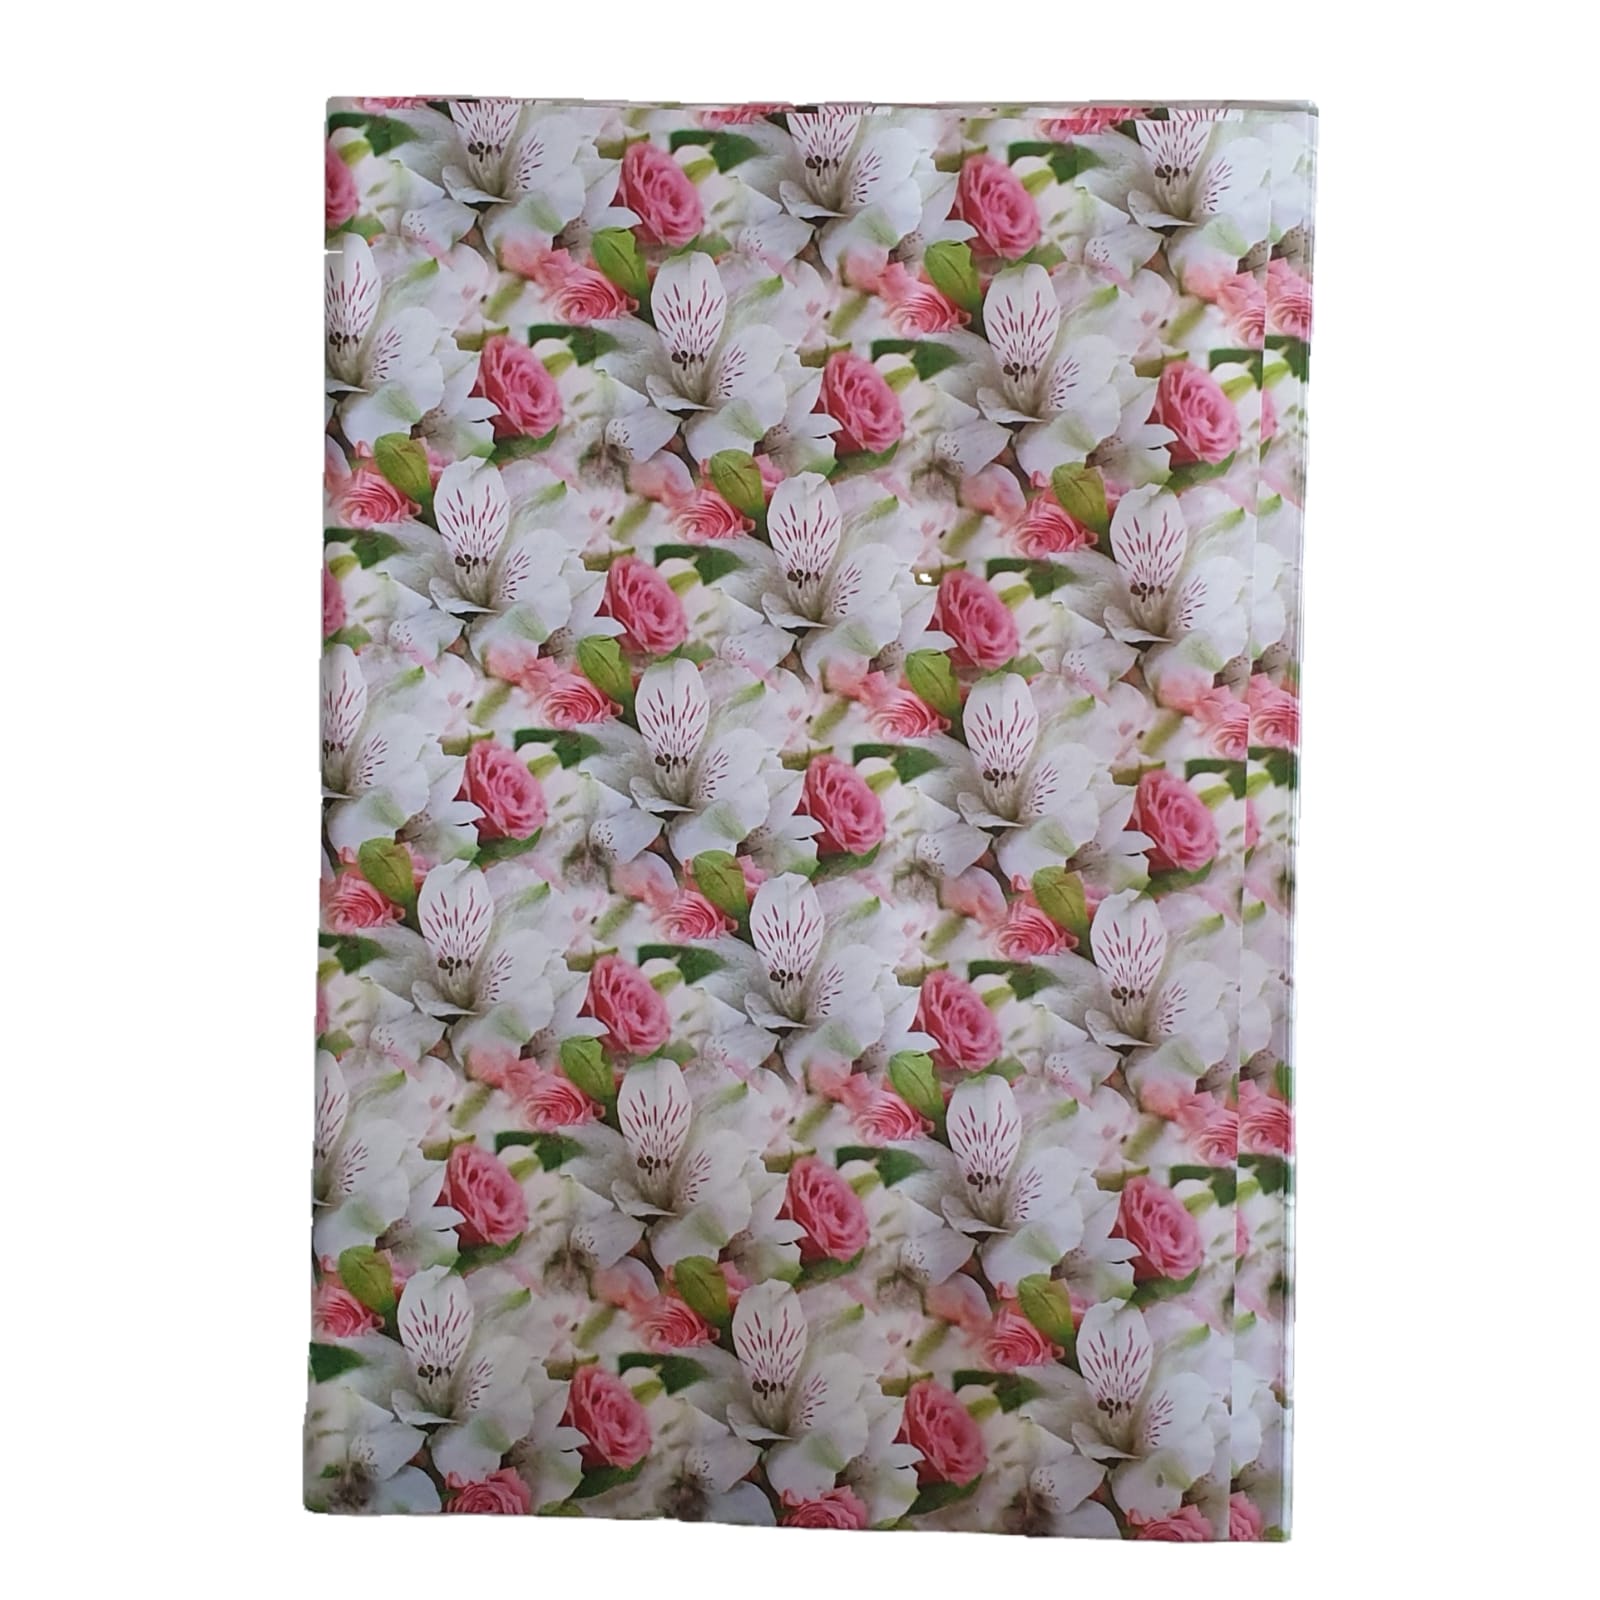 Hartie ambalaj cu flori albe si roz 50/set